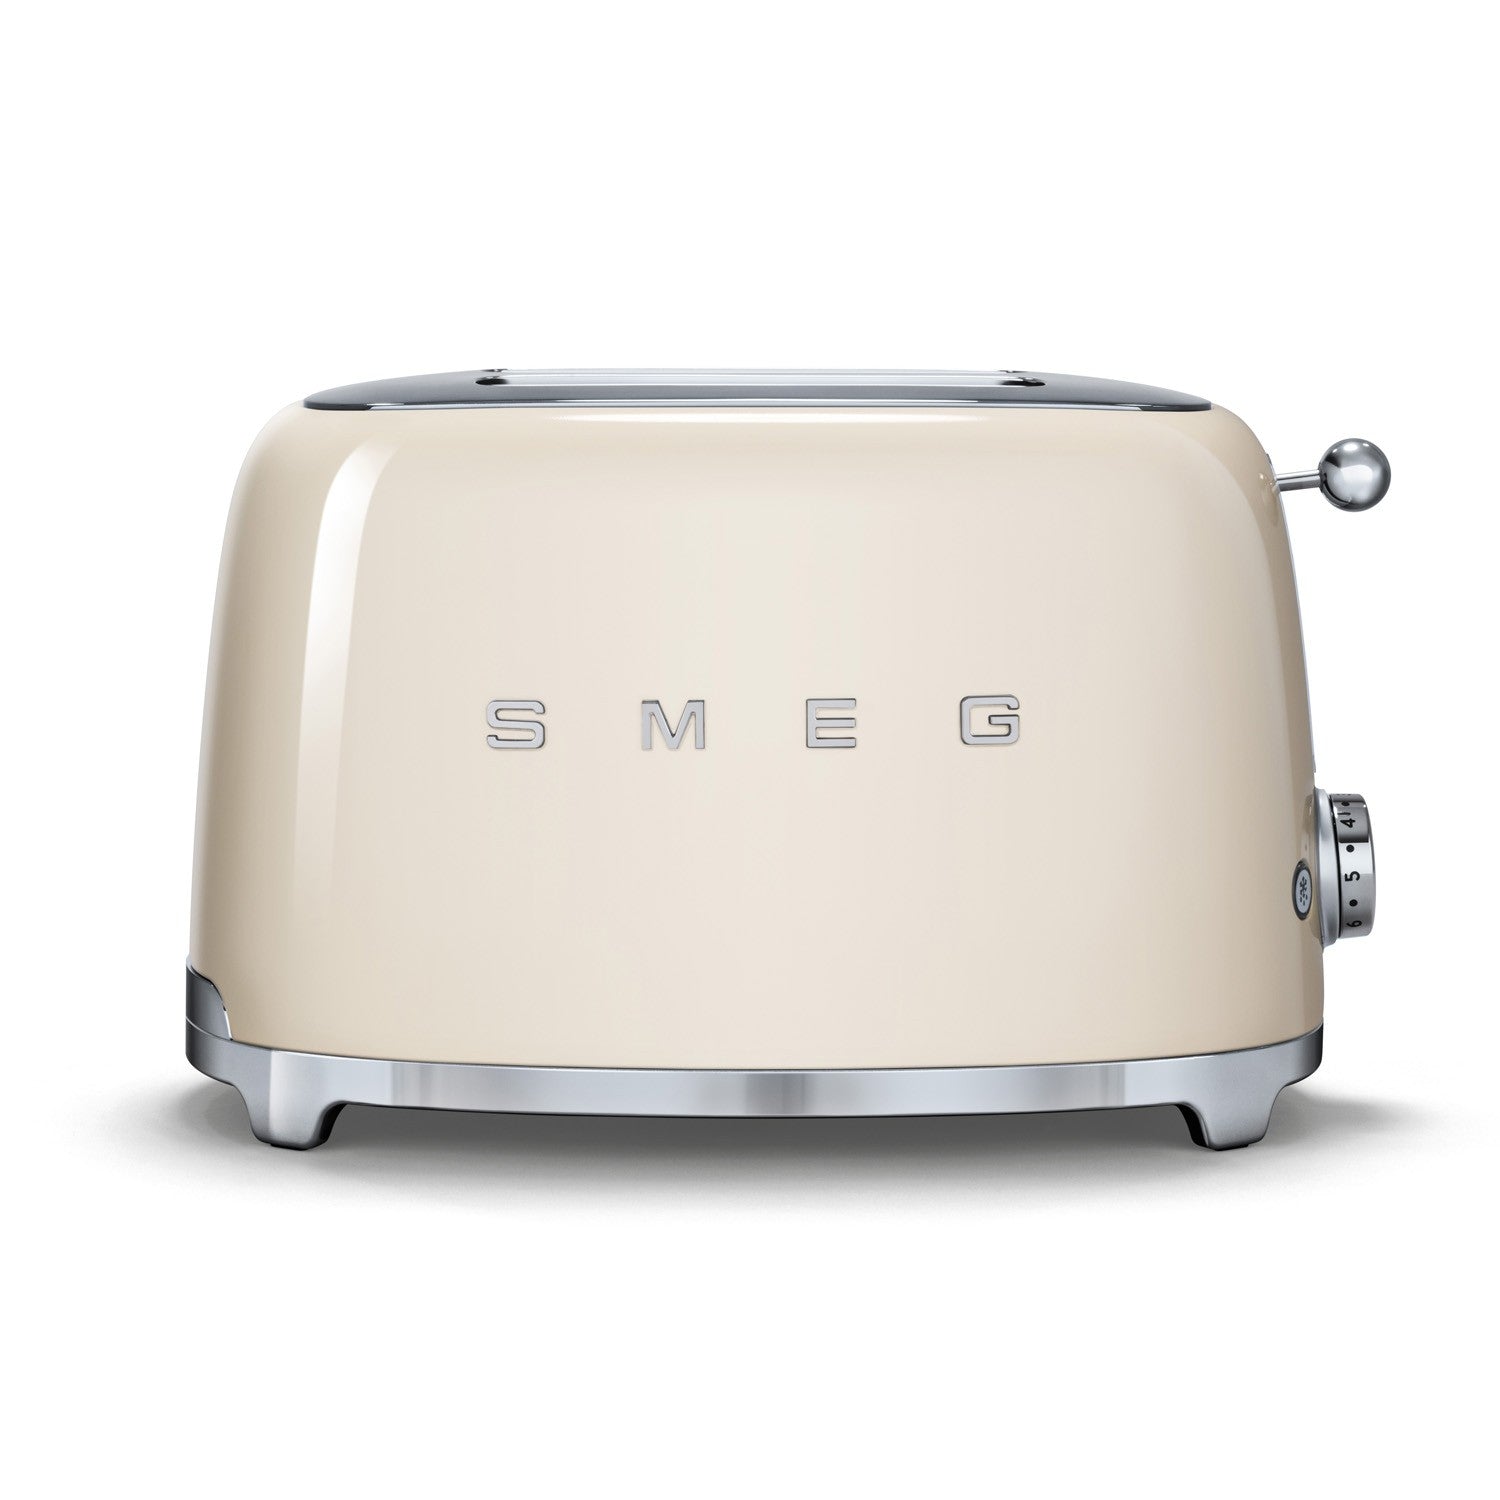 Smeg TSF01 Retro 2 Slice Toaster - Cream from MagicVision